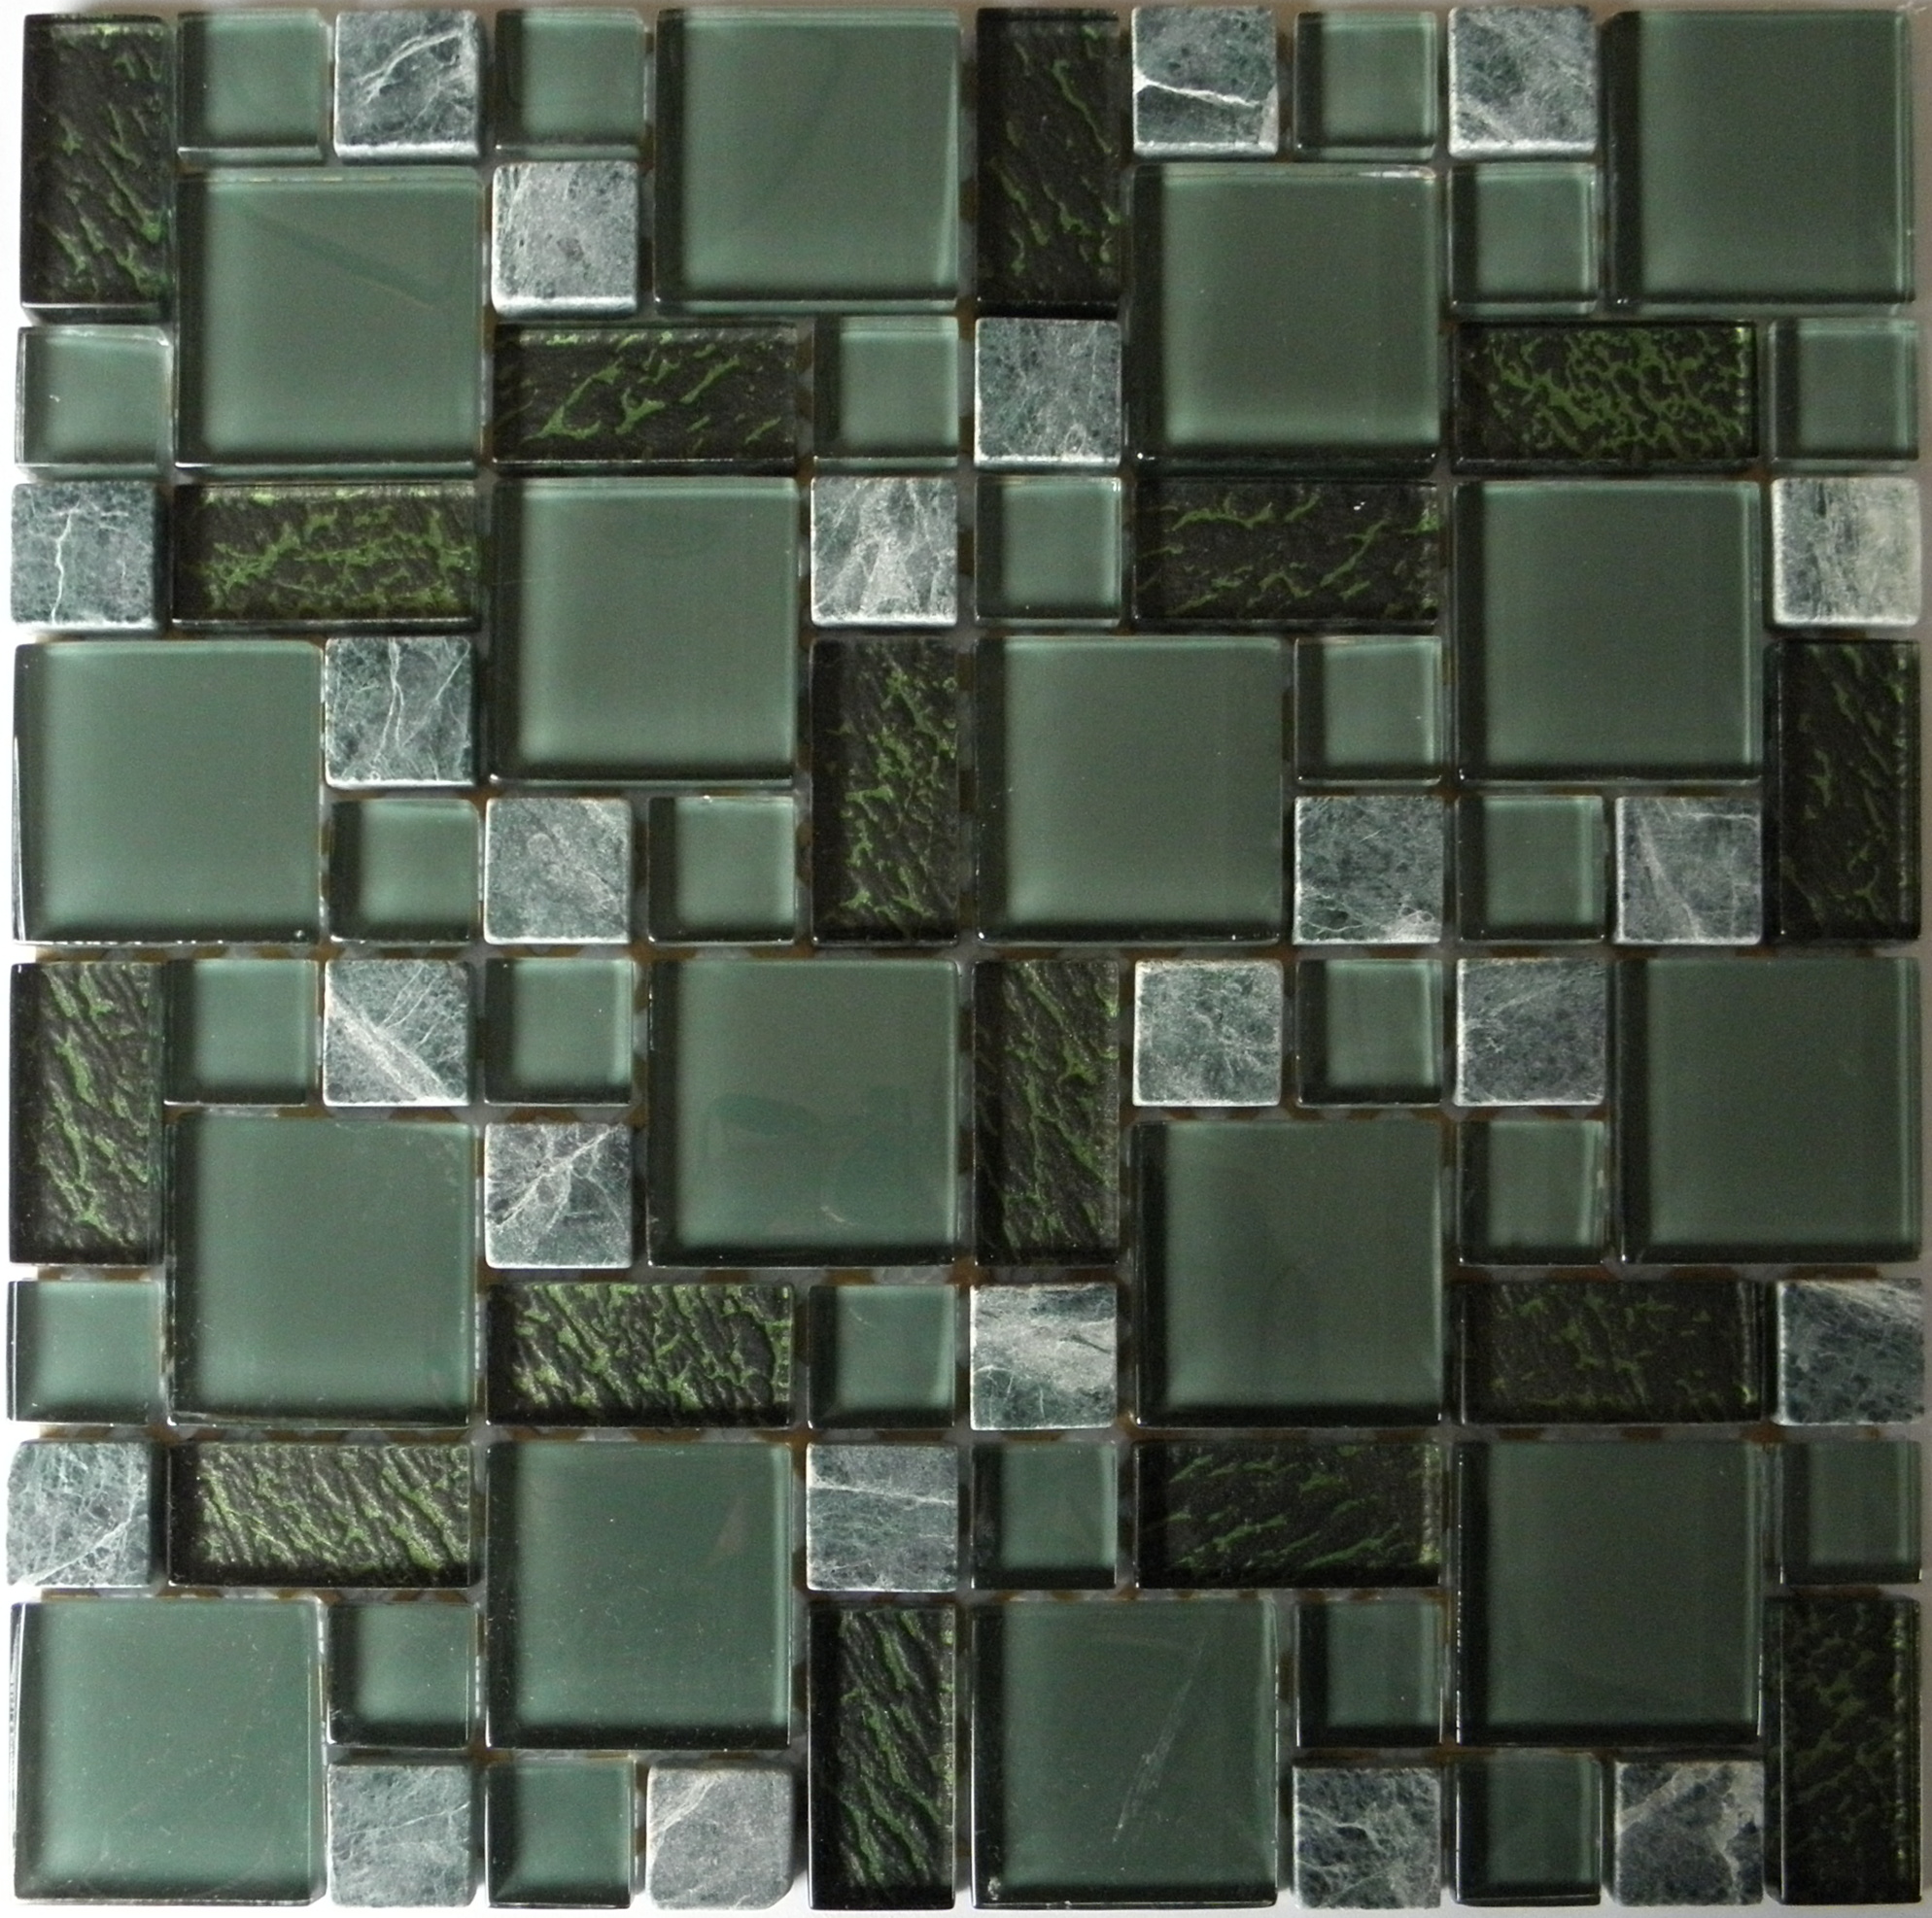 Mosaic MKS481 Mozaika Multix8 298x298 mm zelený mix [MKS481]